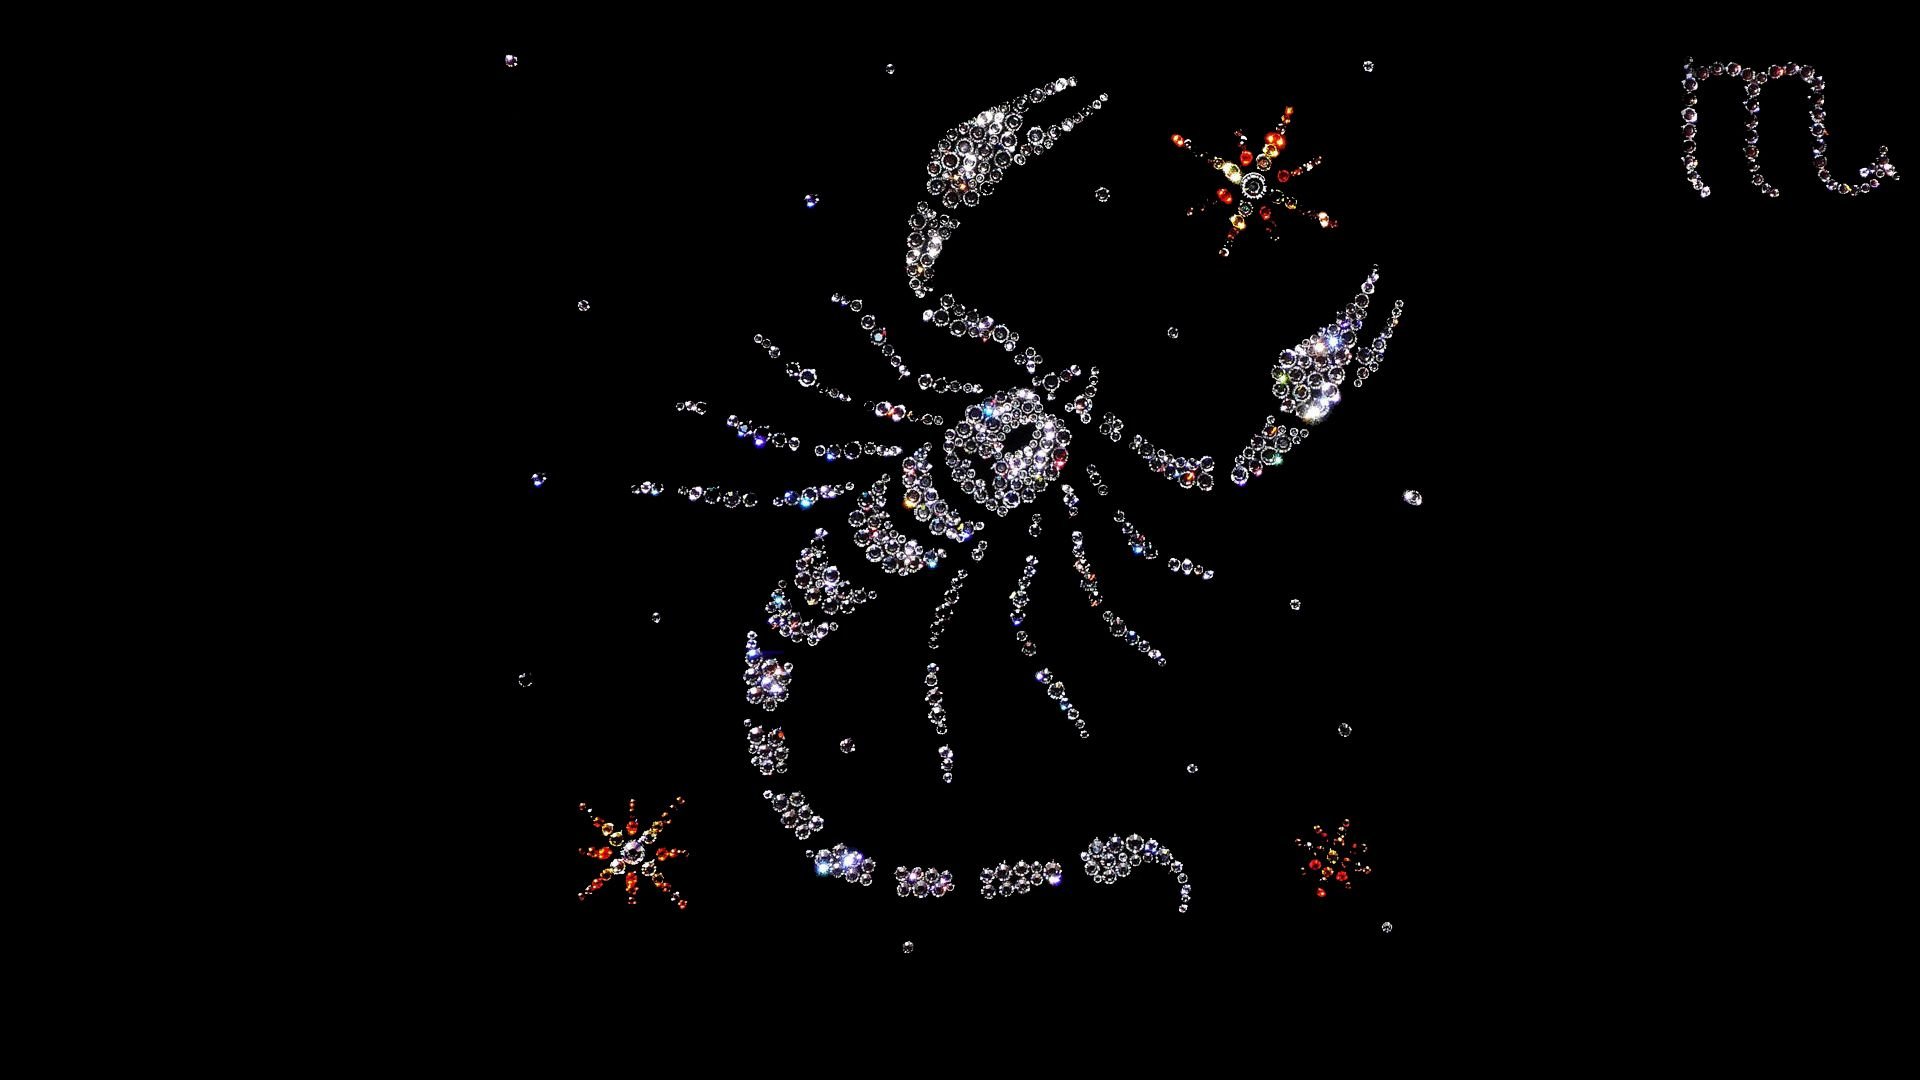 Гороскоп с 8 14 апреля 2024 скорпион